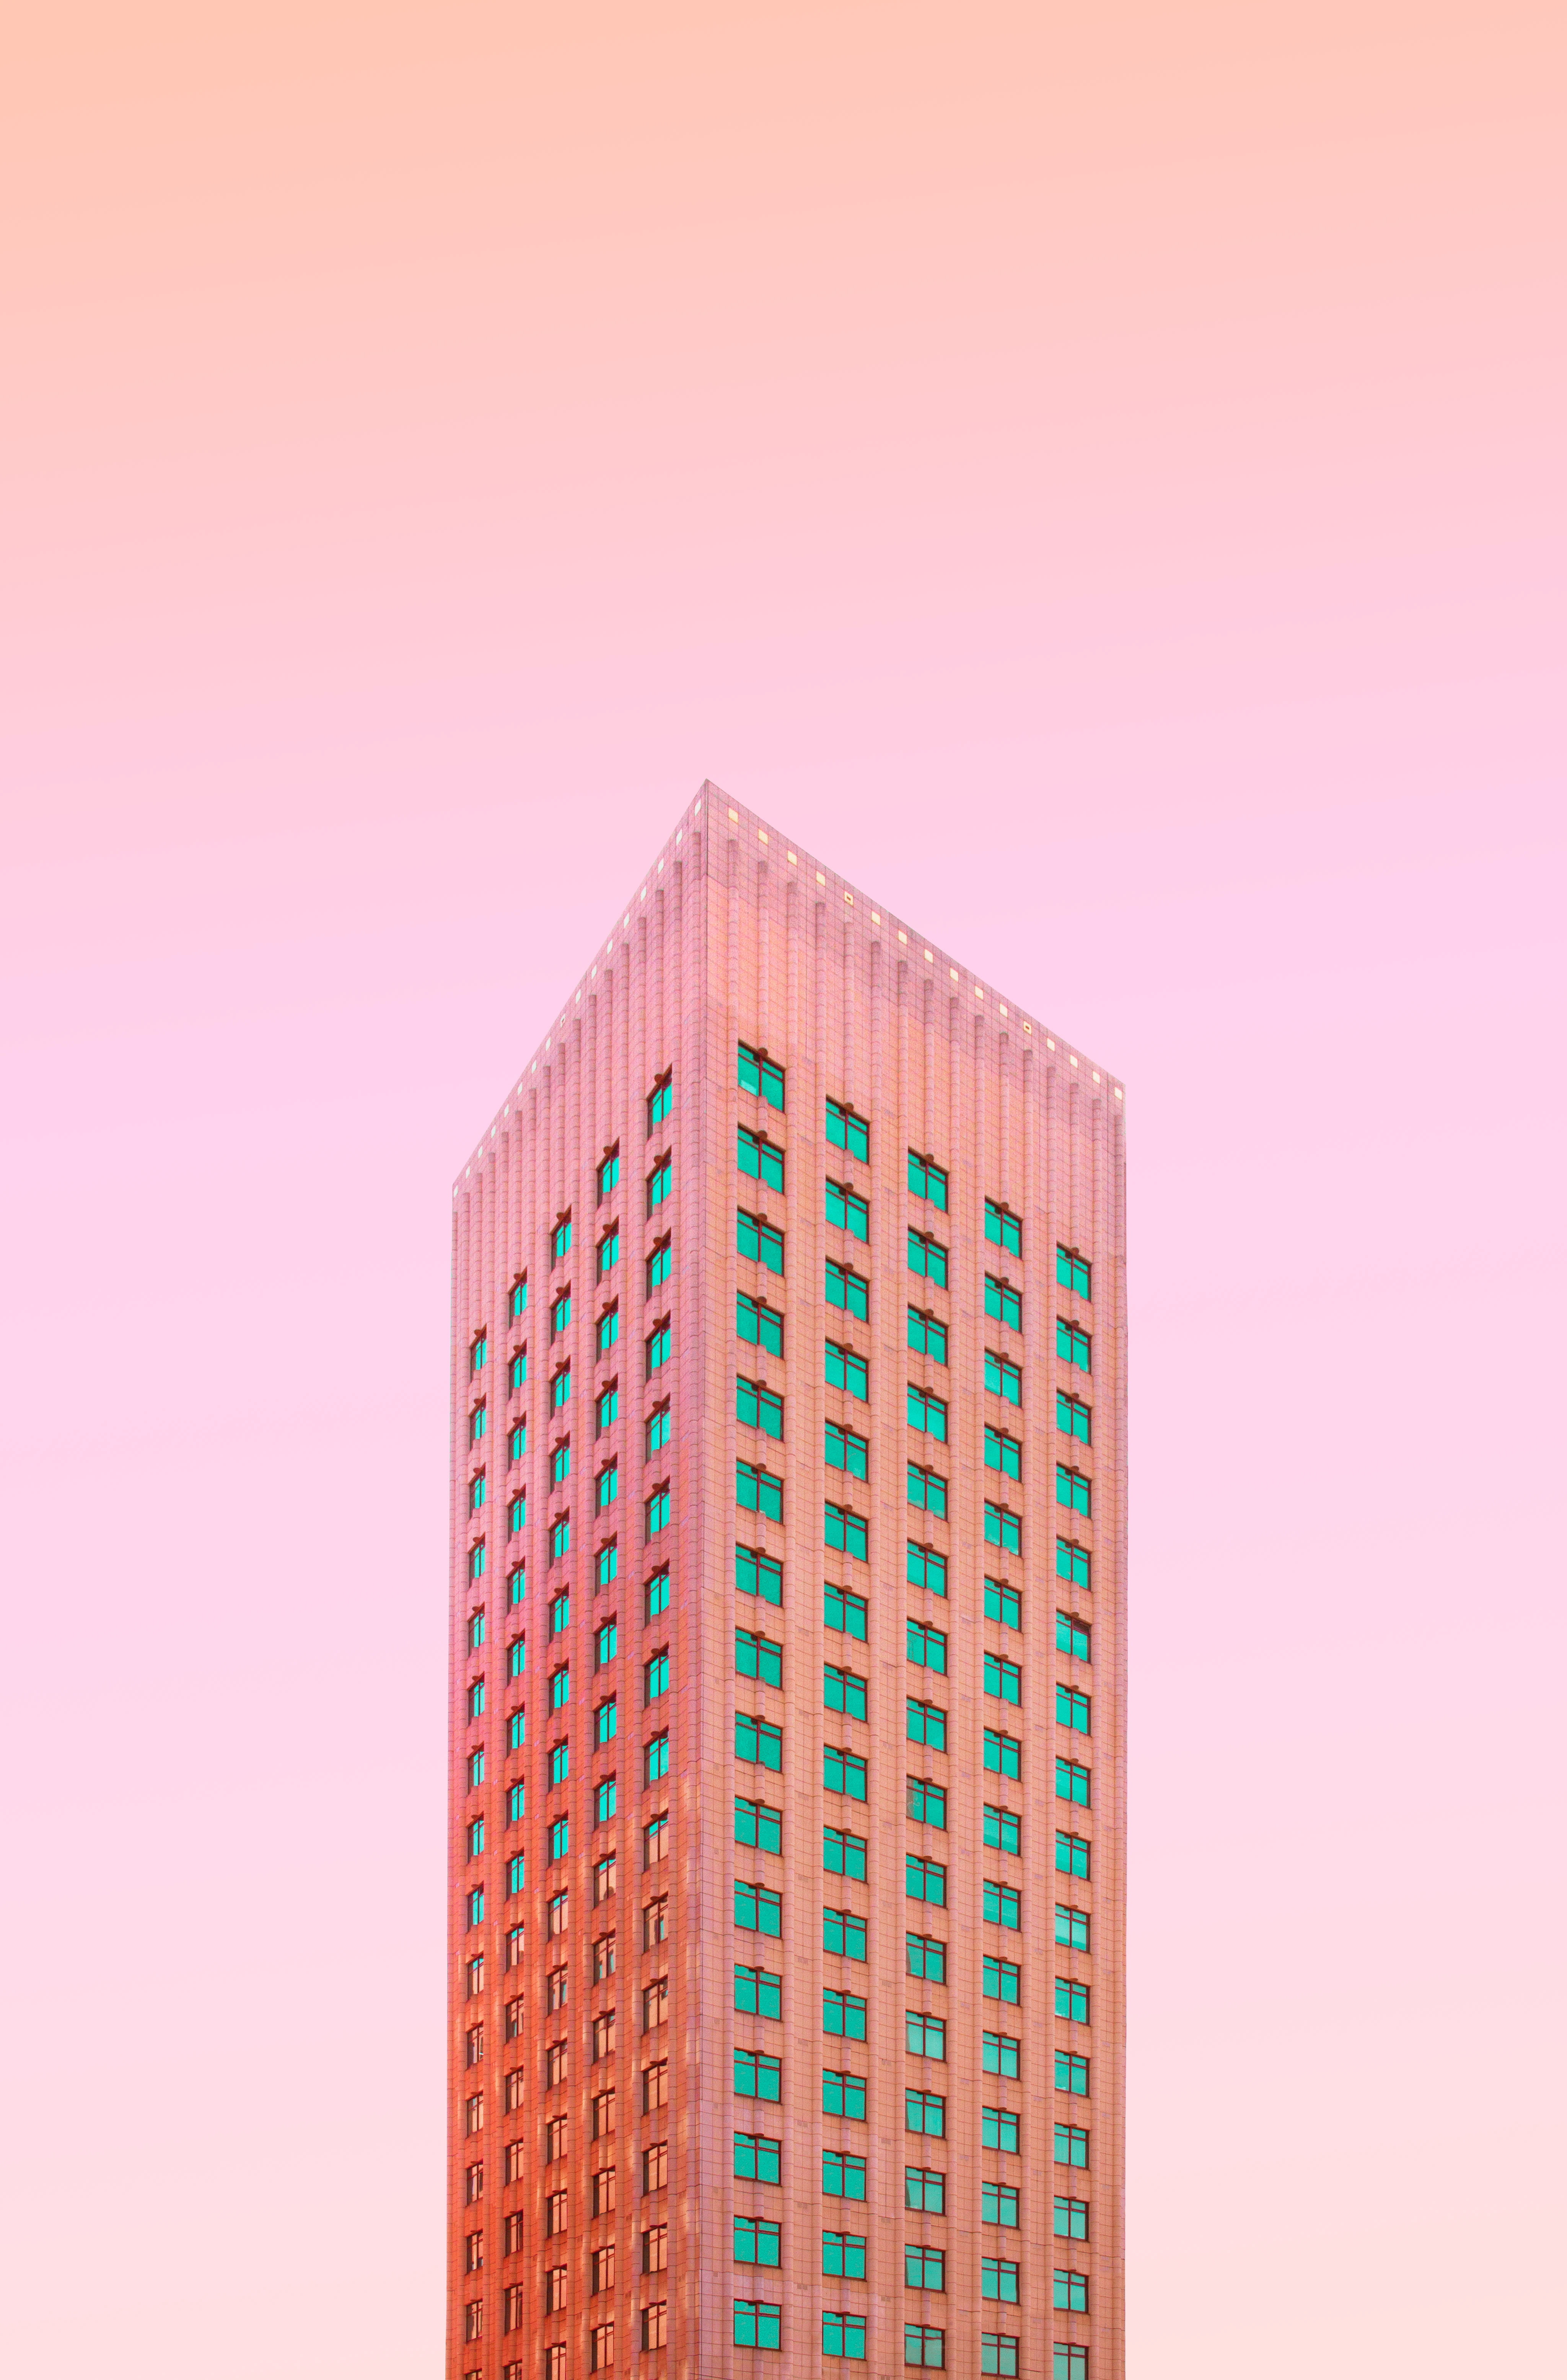 high rise building illustration, facade, architecture, minimalism